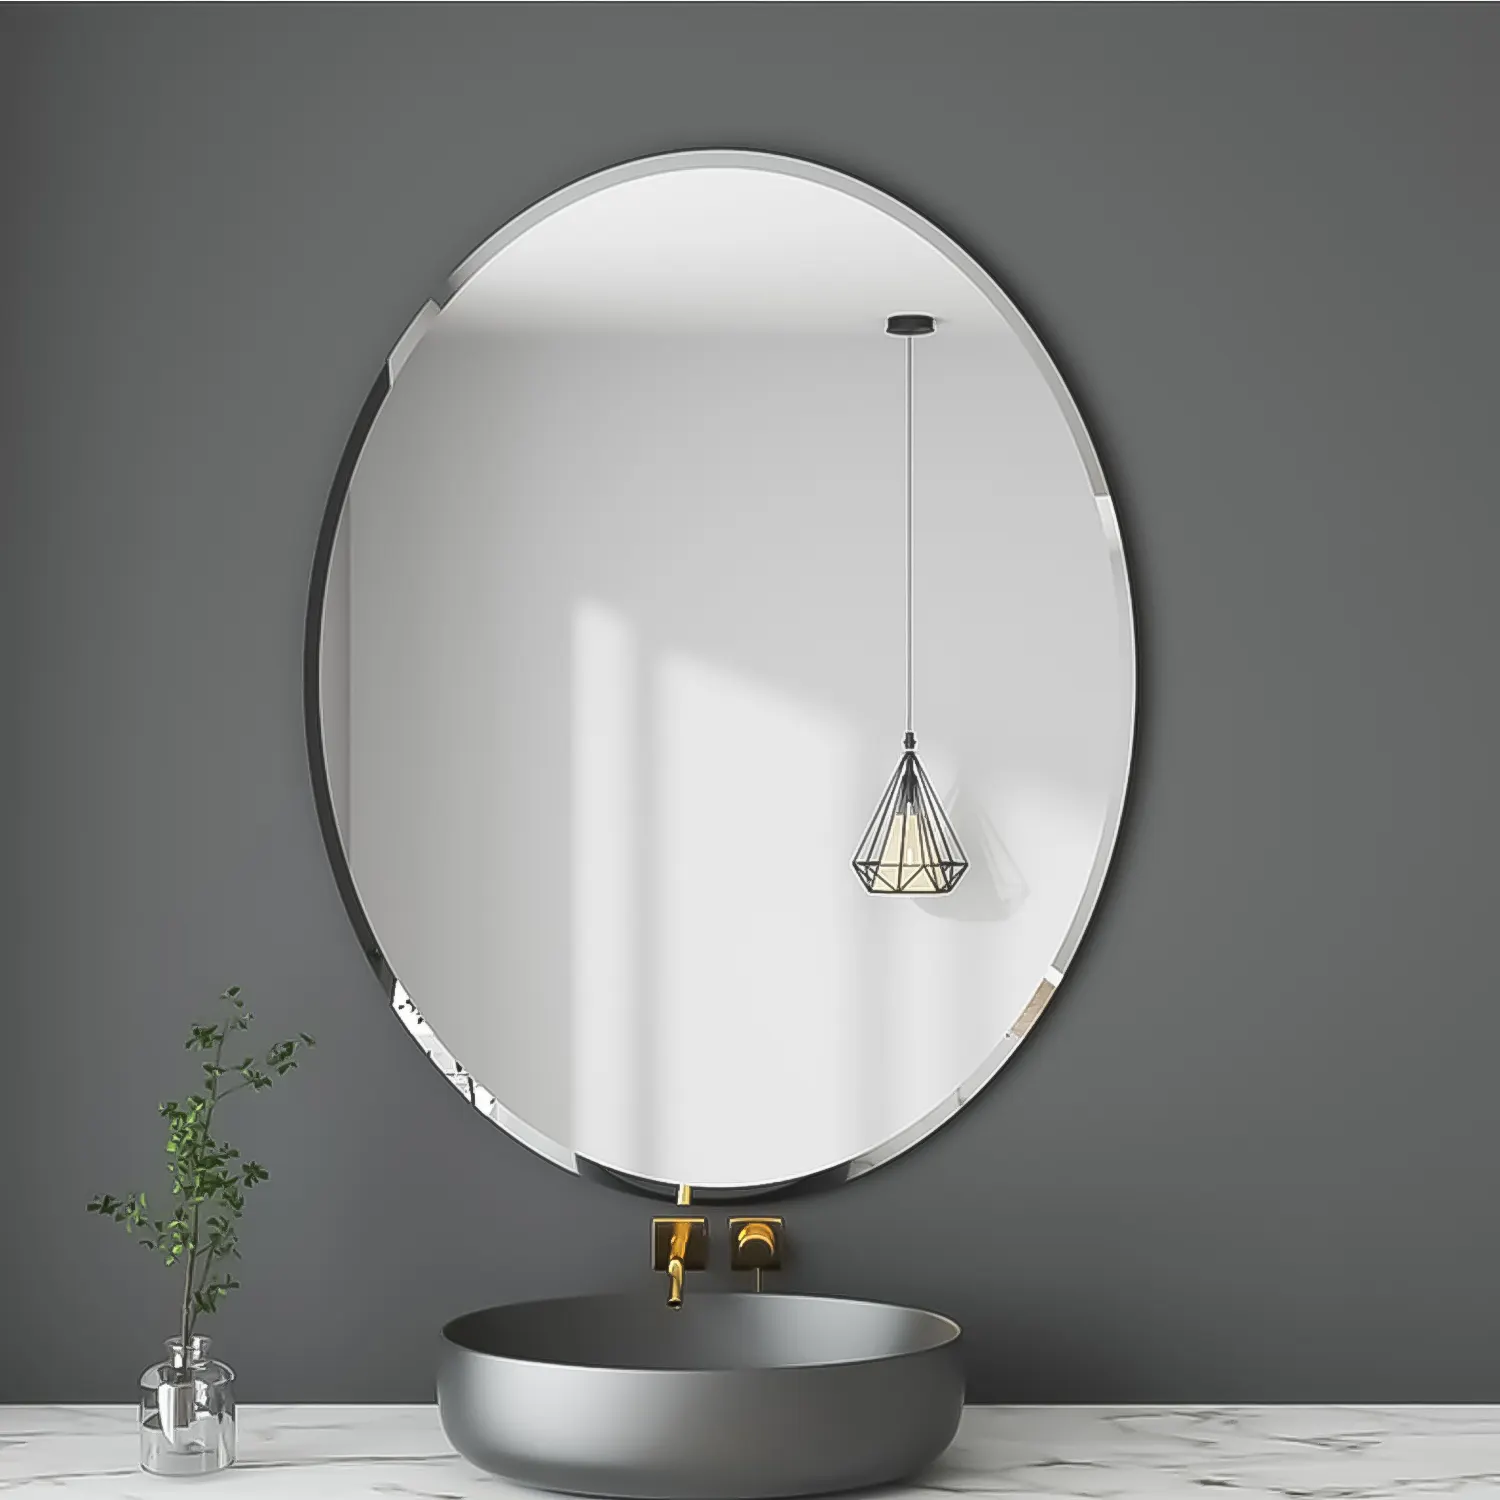 Latest Design Hotel Bathroom Decoration Mirror LED Light Mirror Washing Mirrors Wall